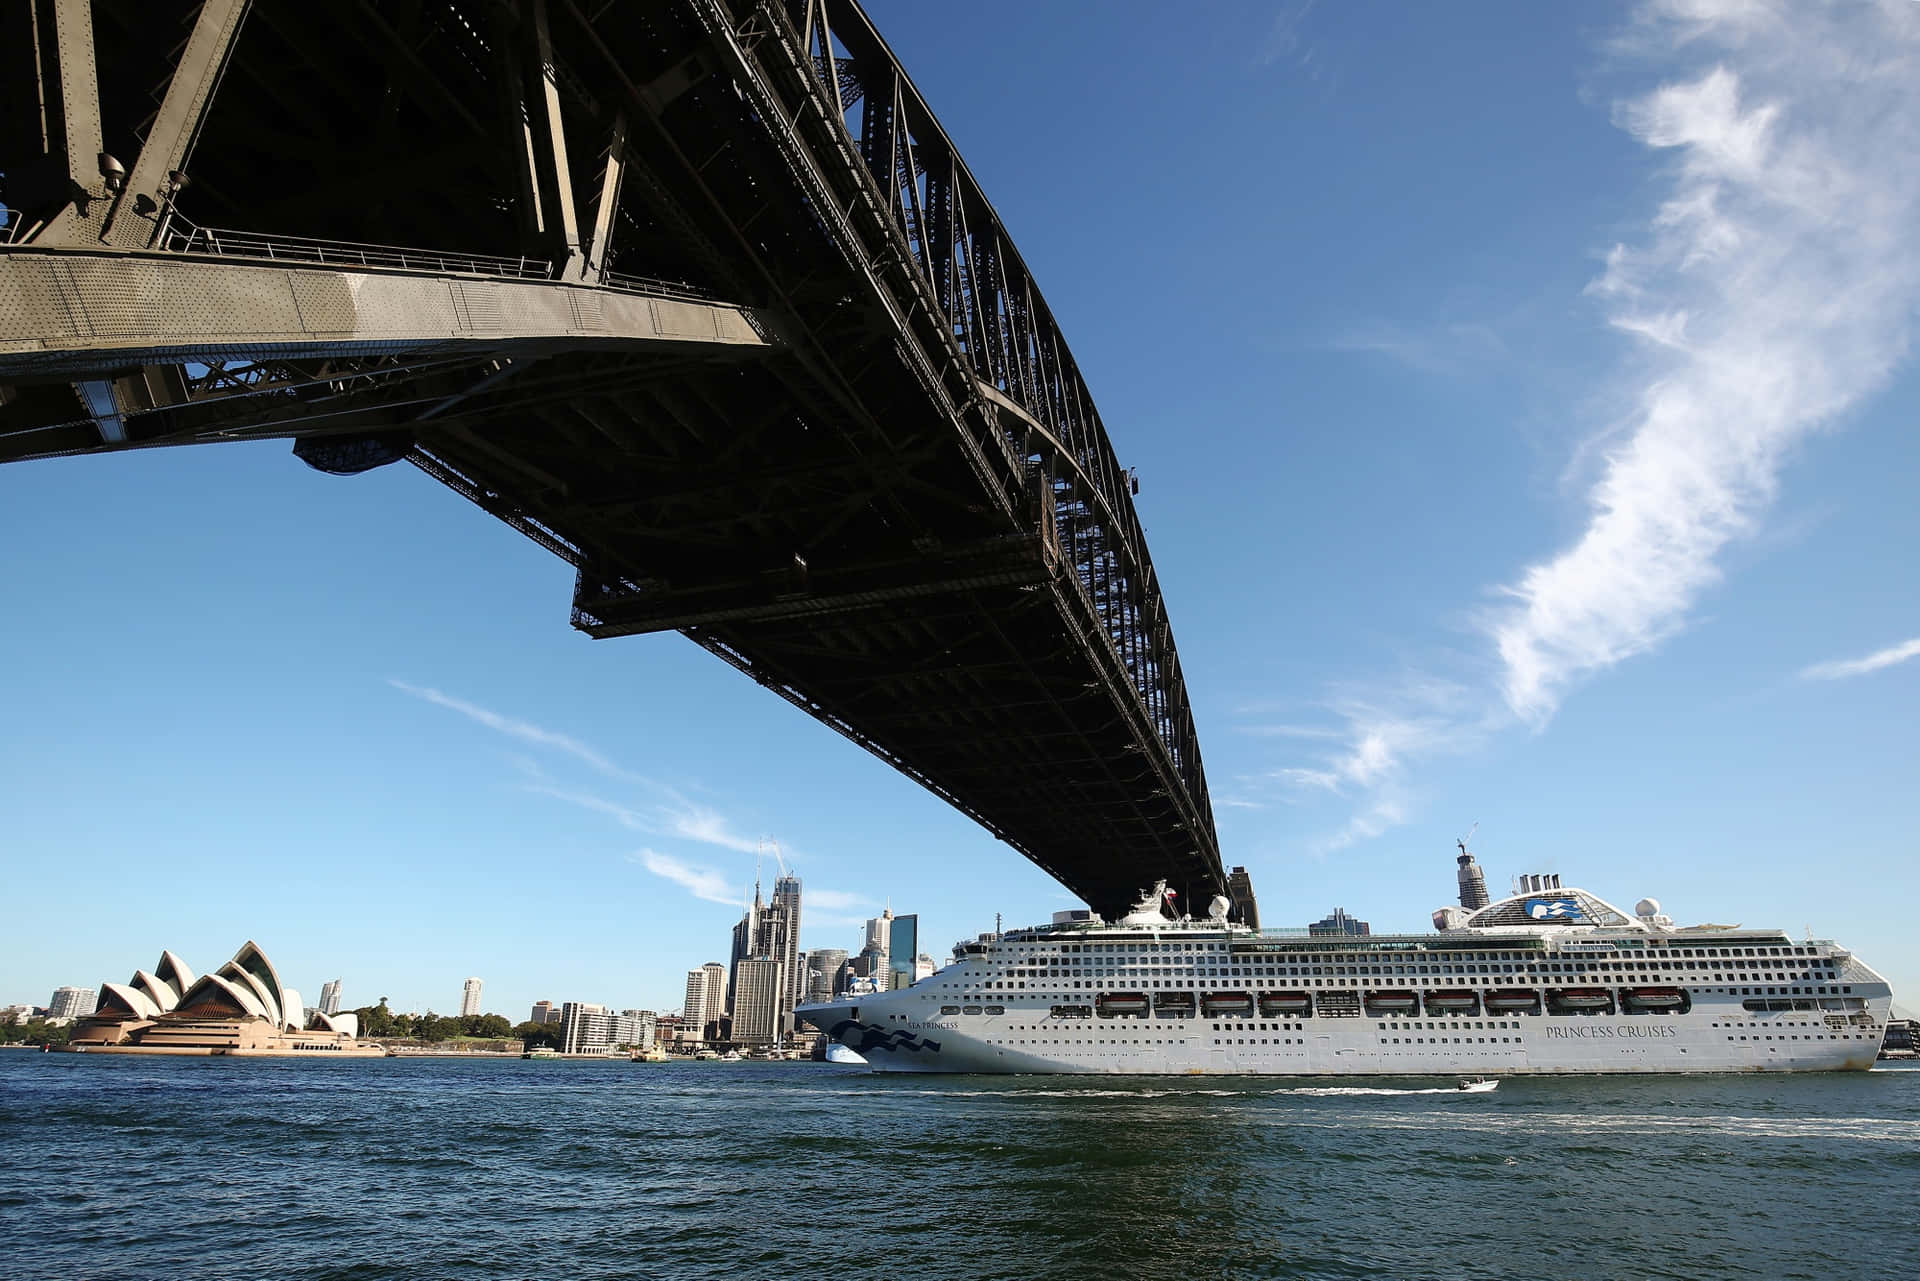 Sydney Harbour Cruise Under Bridge Wallpaper